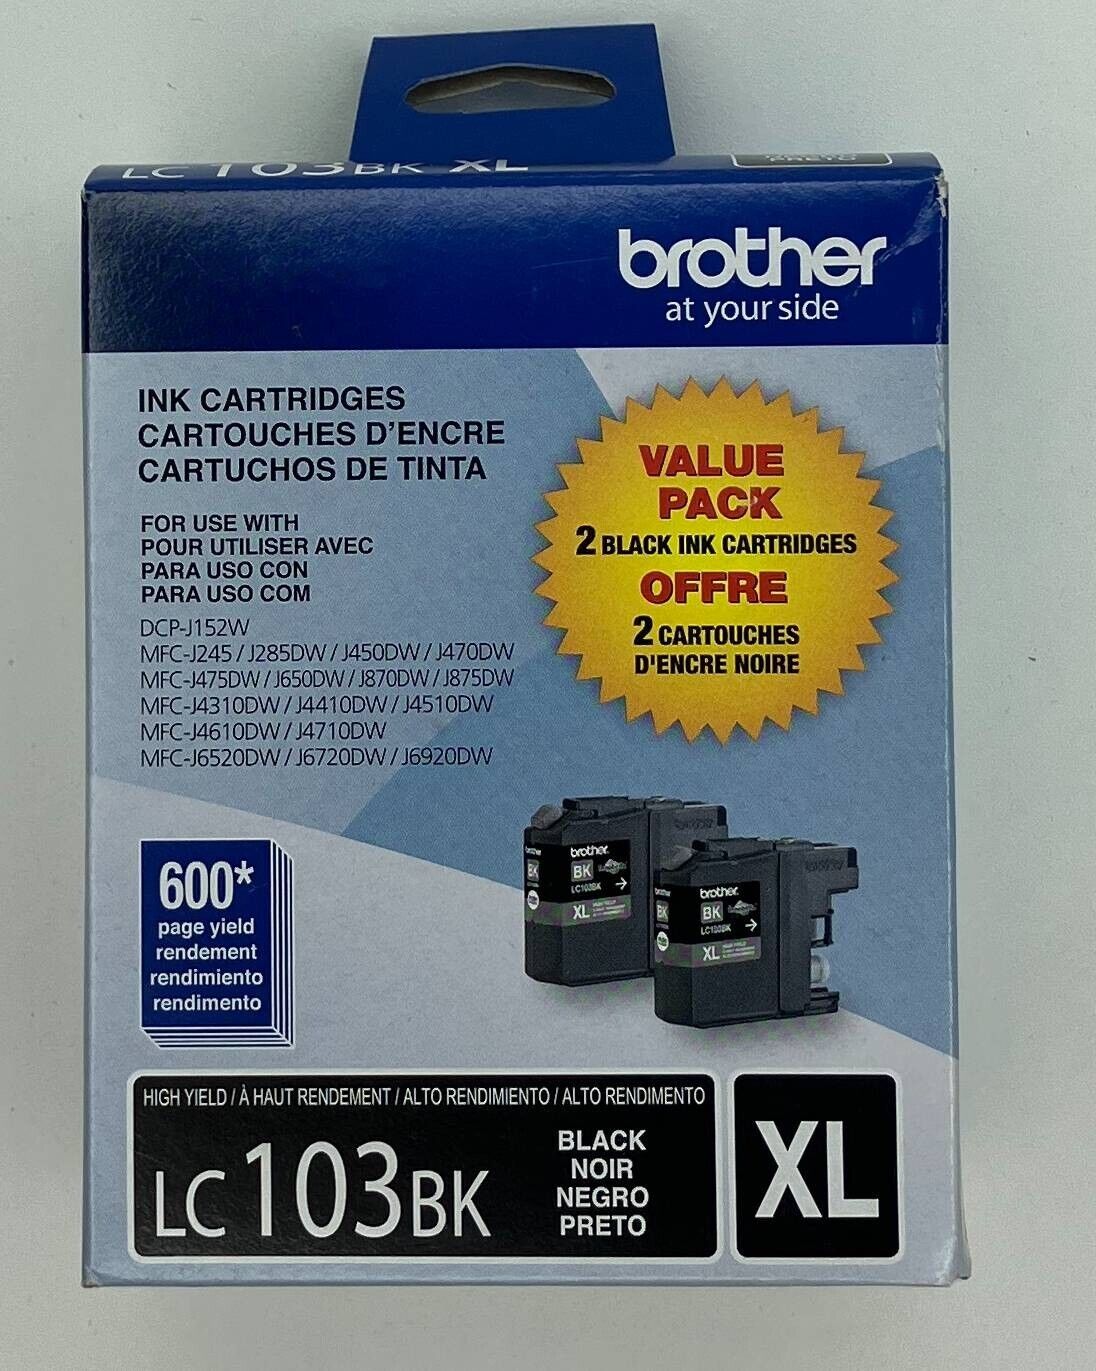 Genuine Brother LC103BK XL Black Pack Ink Cartridges EXP 09/26 2 Pack SEALED